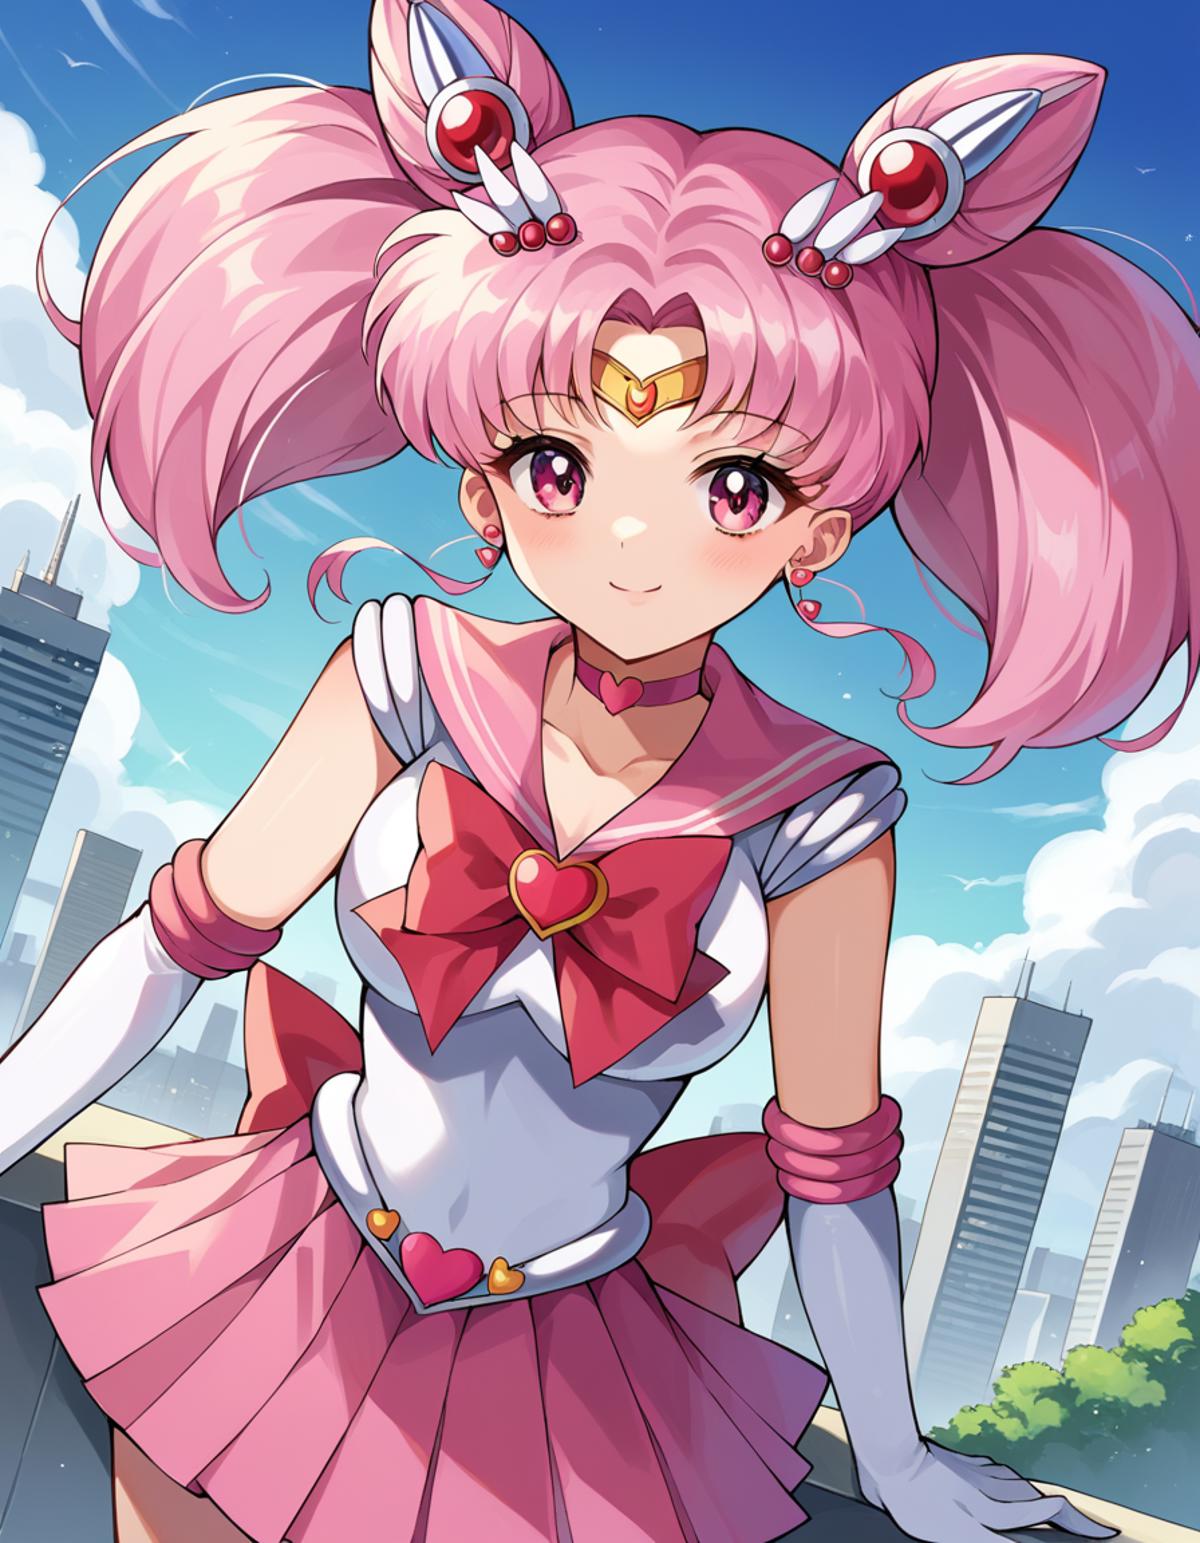 Chibiusa Tsukino (ちびうさ) / Sailor Chibi Moon (セーラーちび 